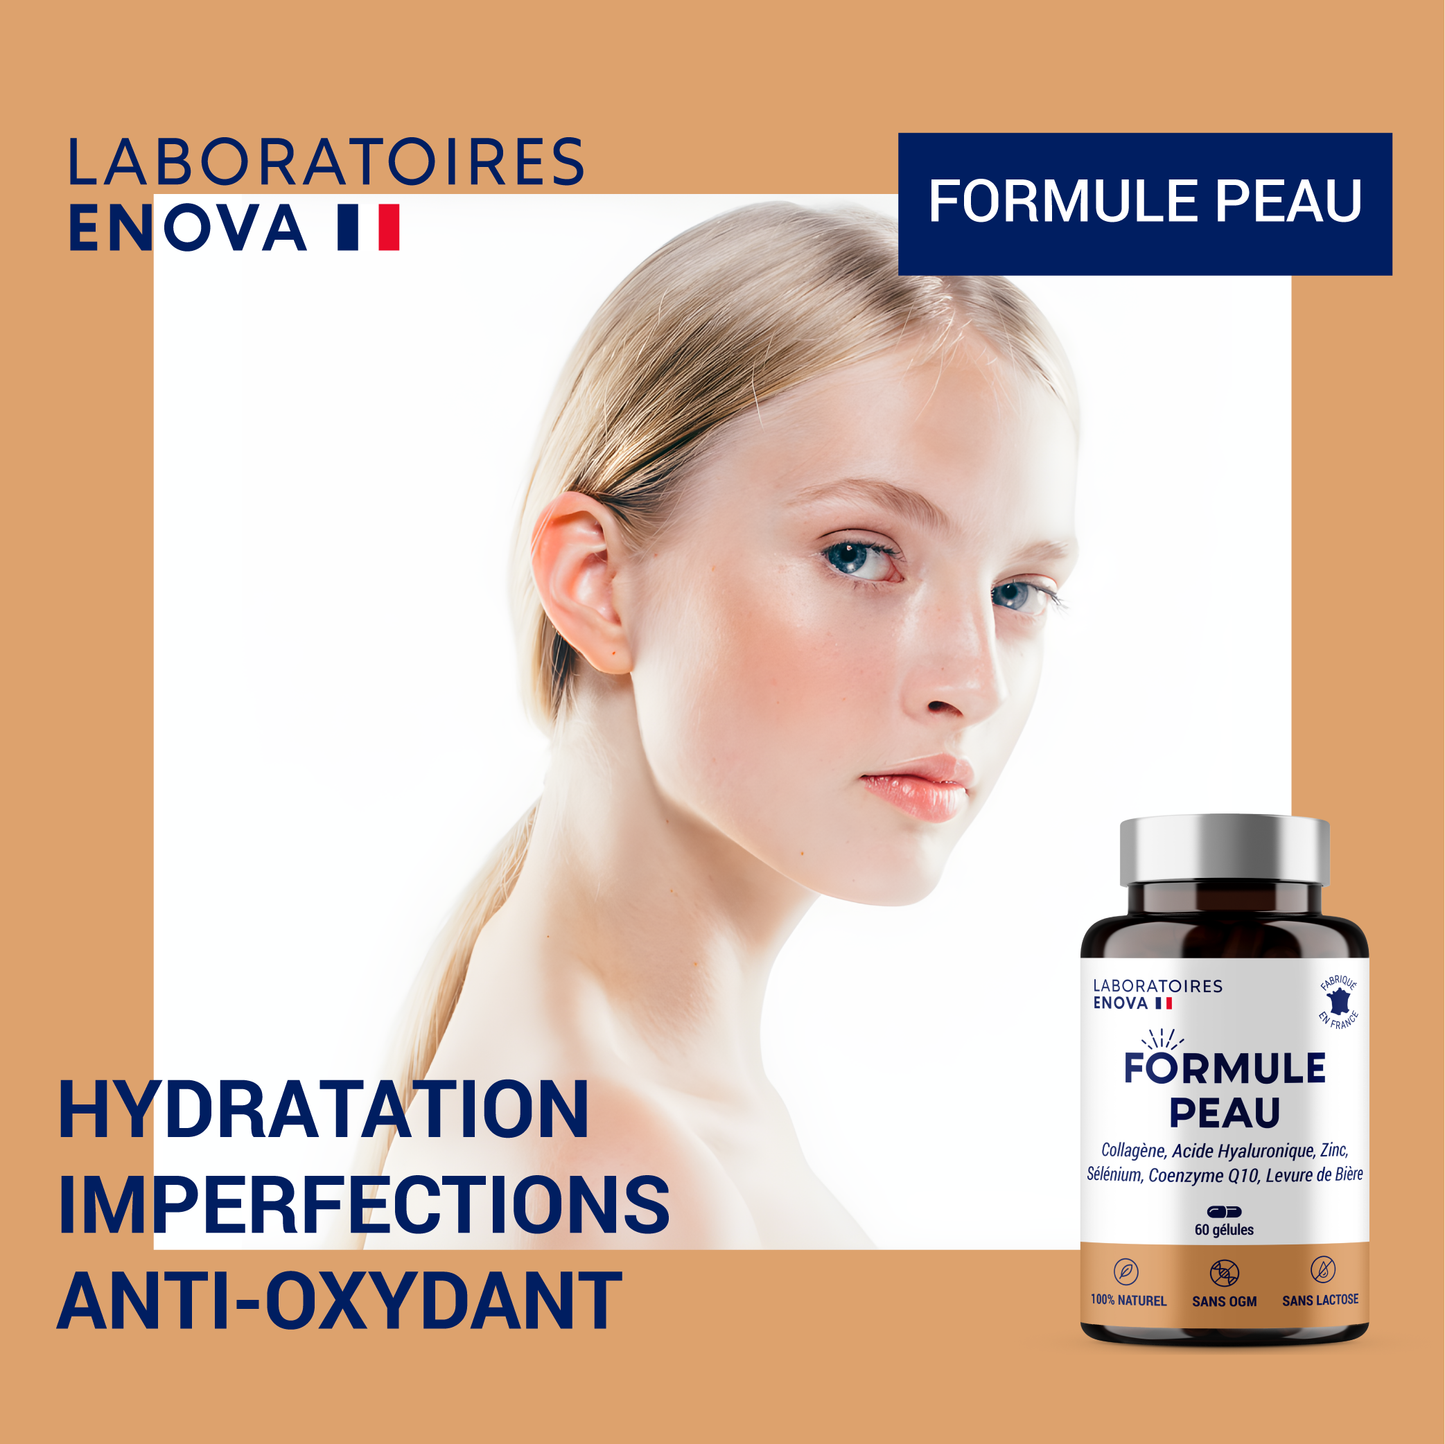 FORMULE PEAU -  Antioxydant, Hydratation, Imperfections